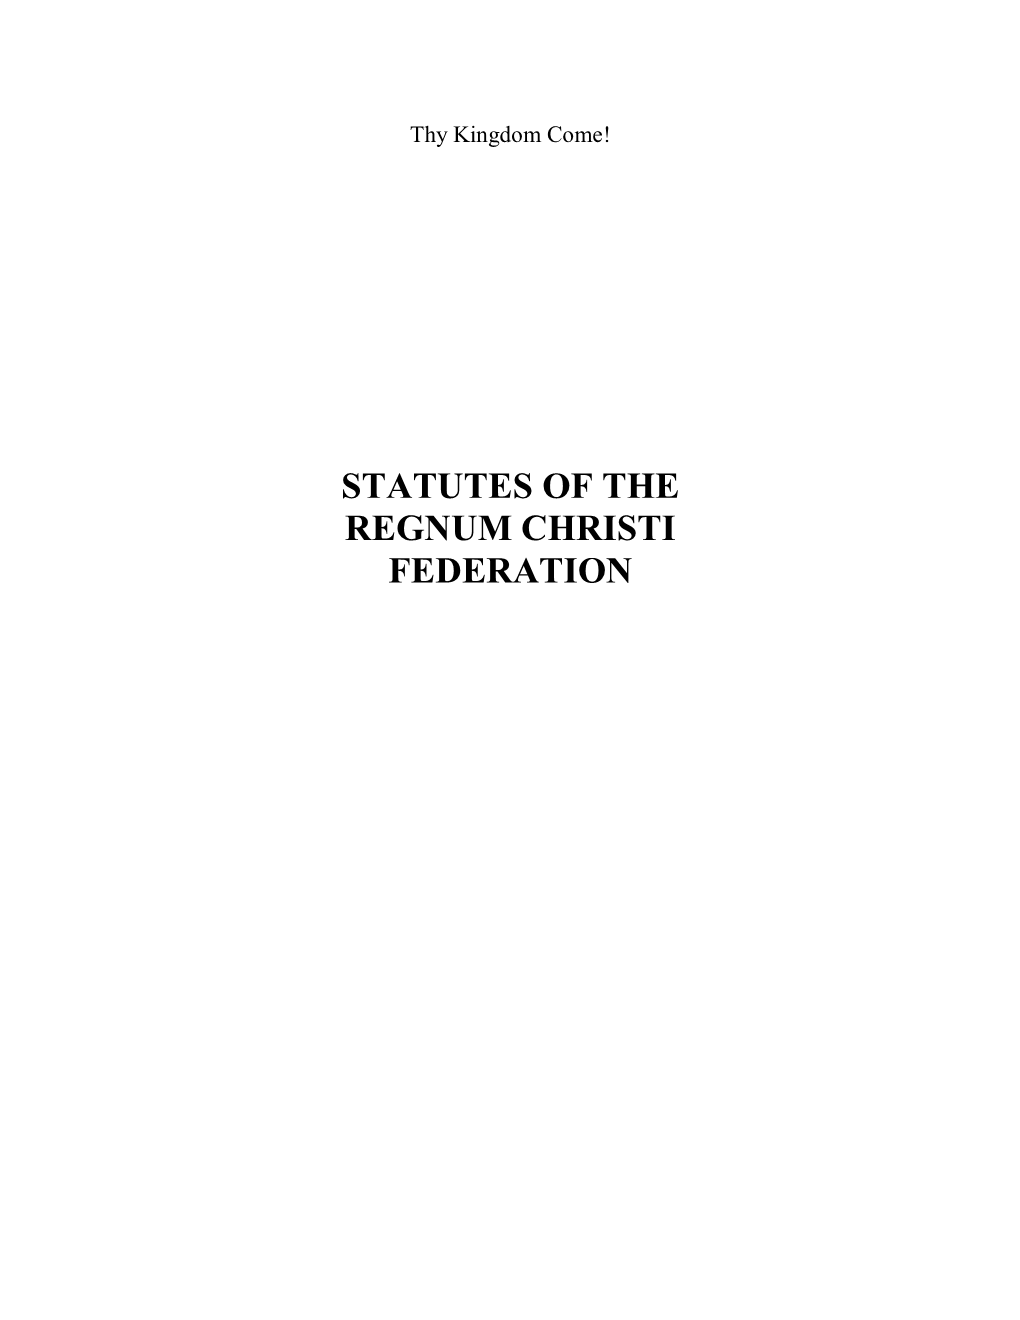 Statutes of the Regnum Christi Federation